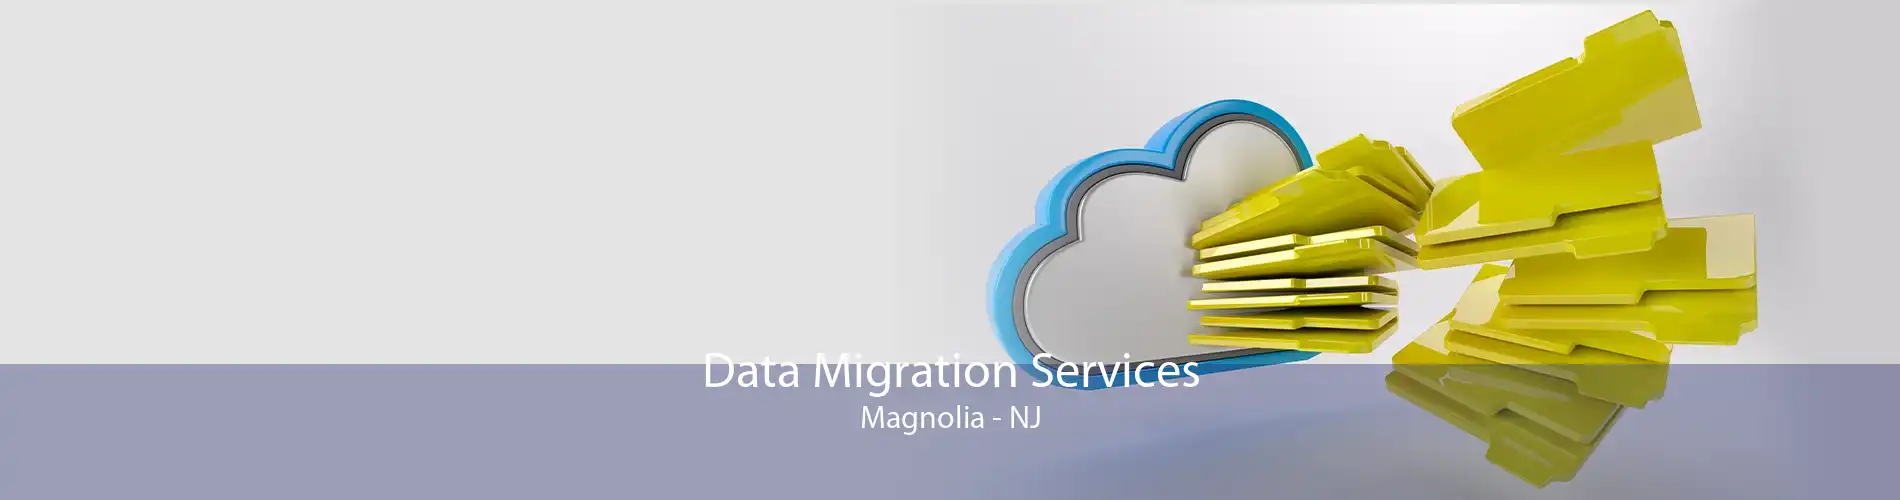 Data Migration Services Magnolia - NJ